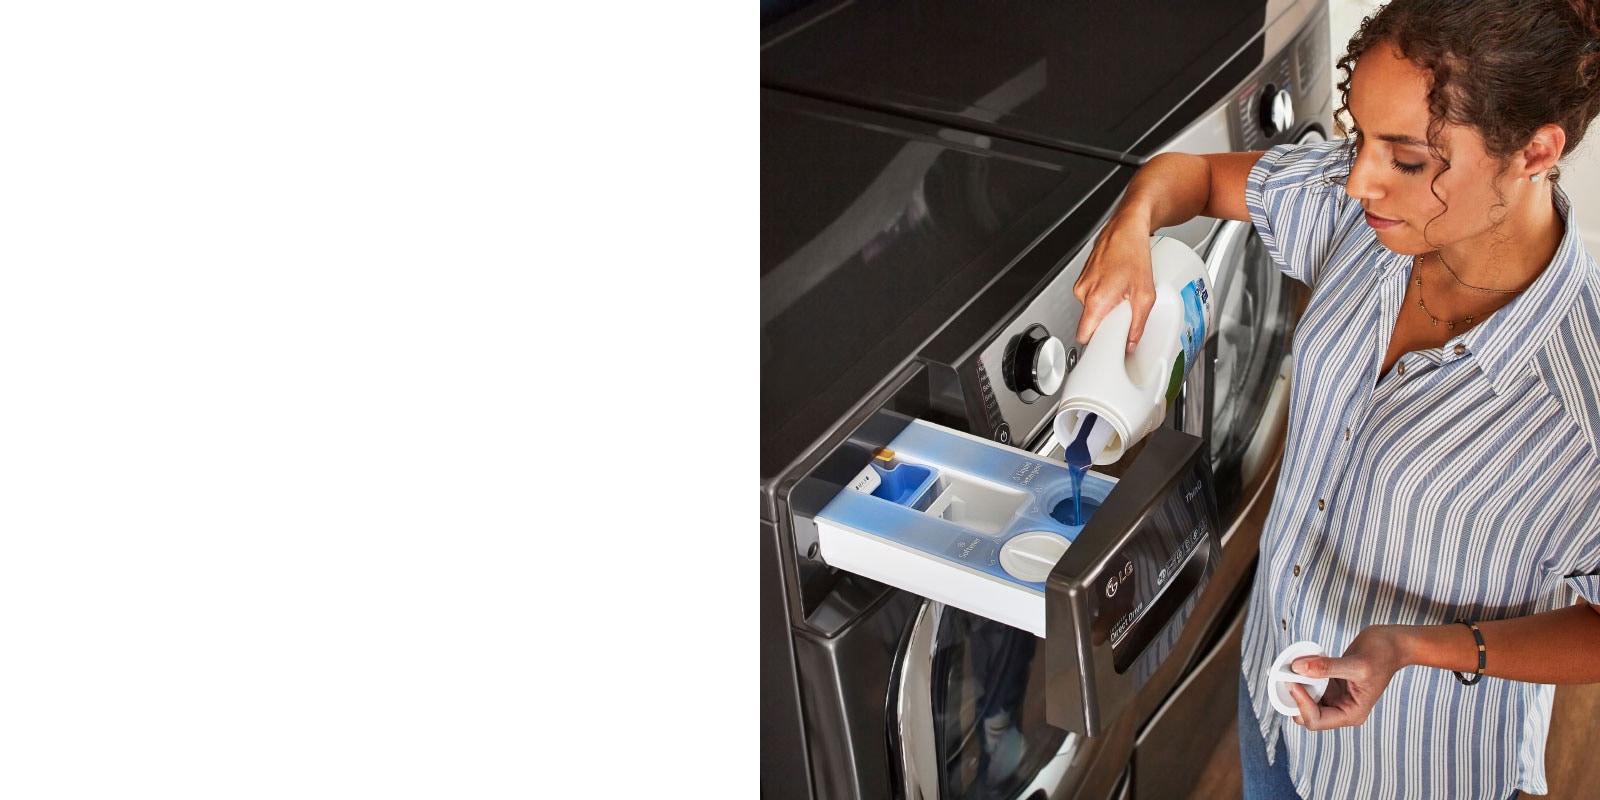 Washer showcasing open detergent and fabric softener dispenser